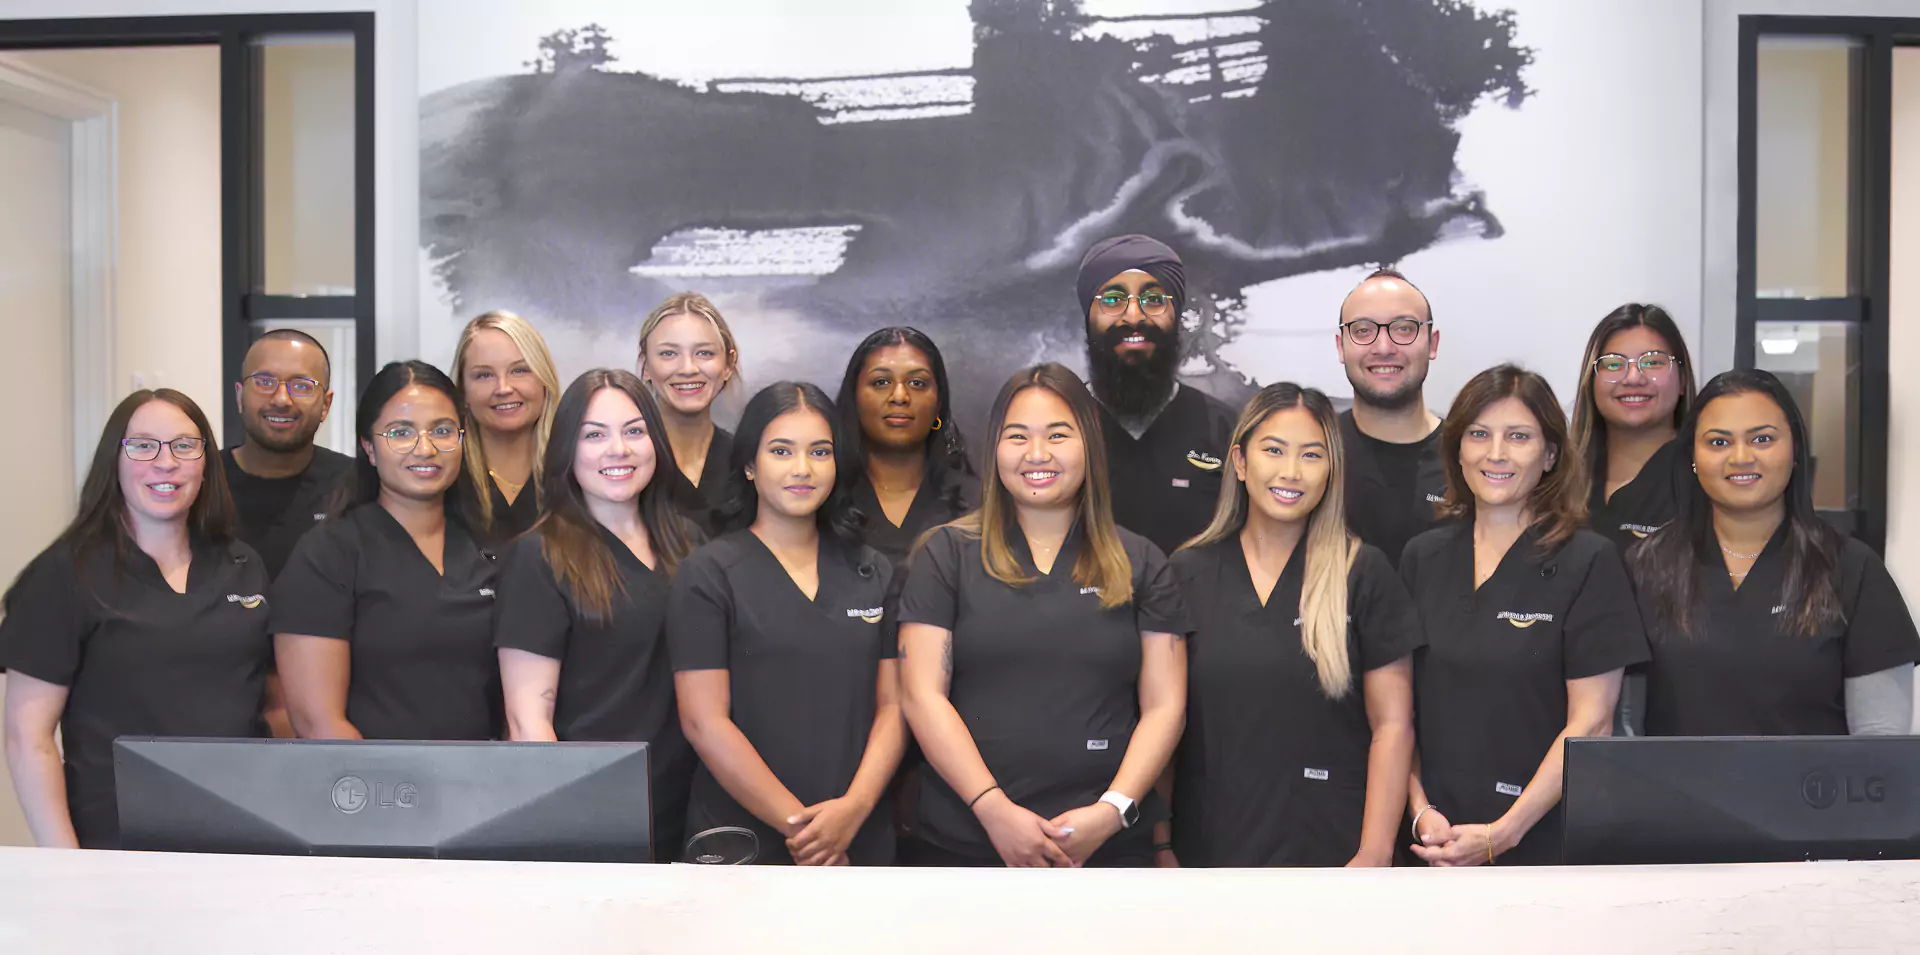 Meet the Markham dentist team at 14th Avenue Dentistry.